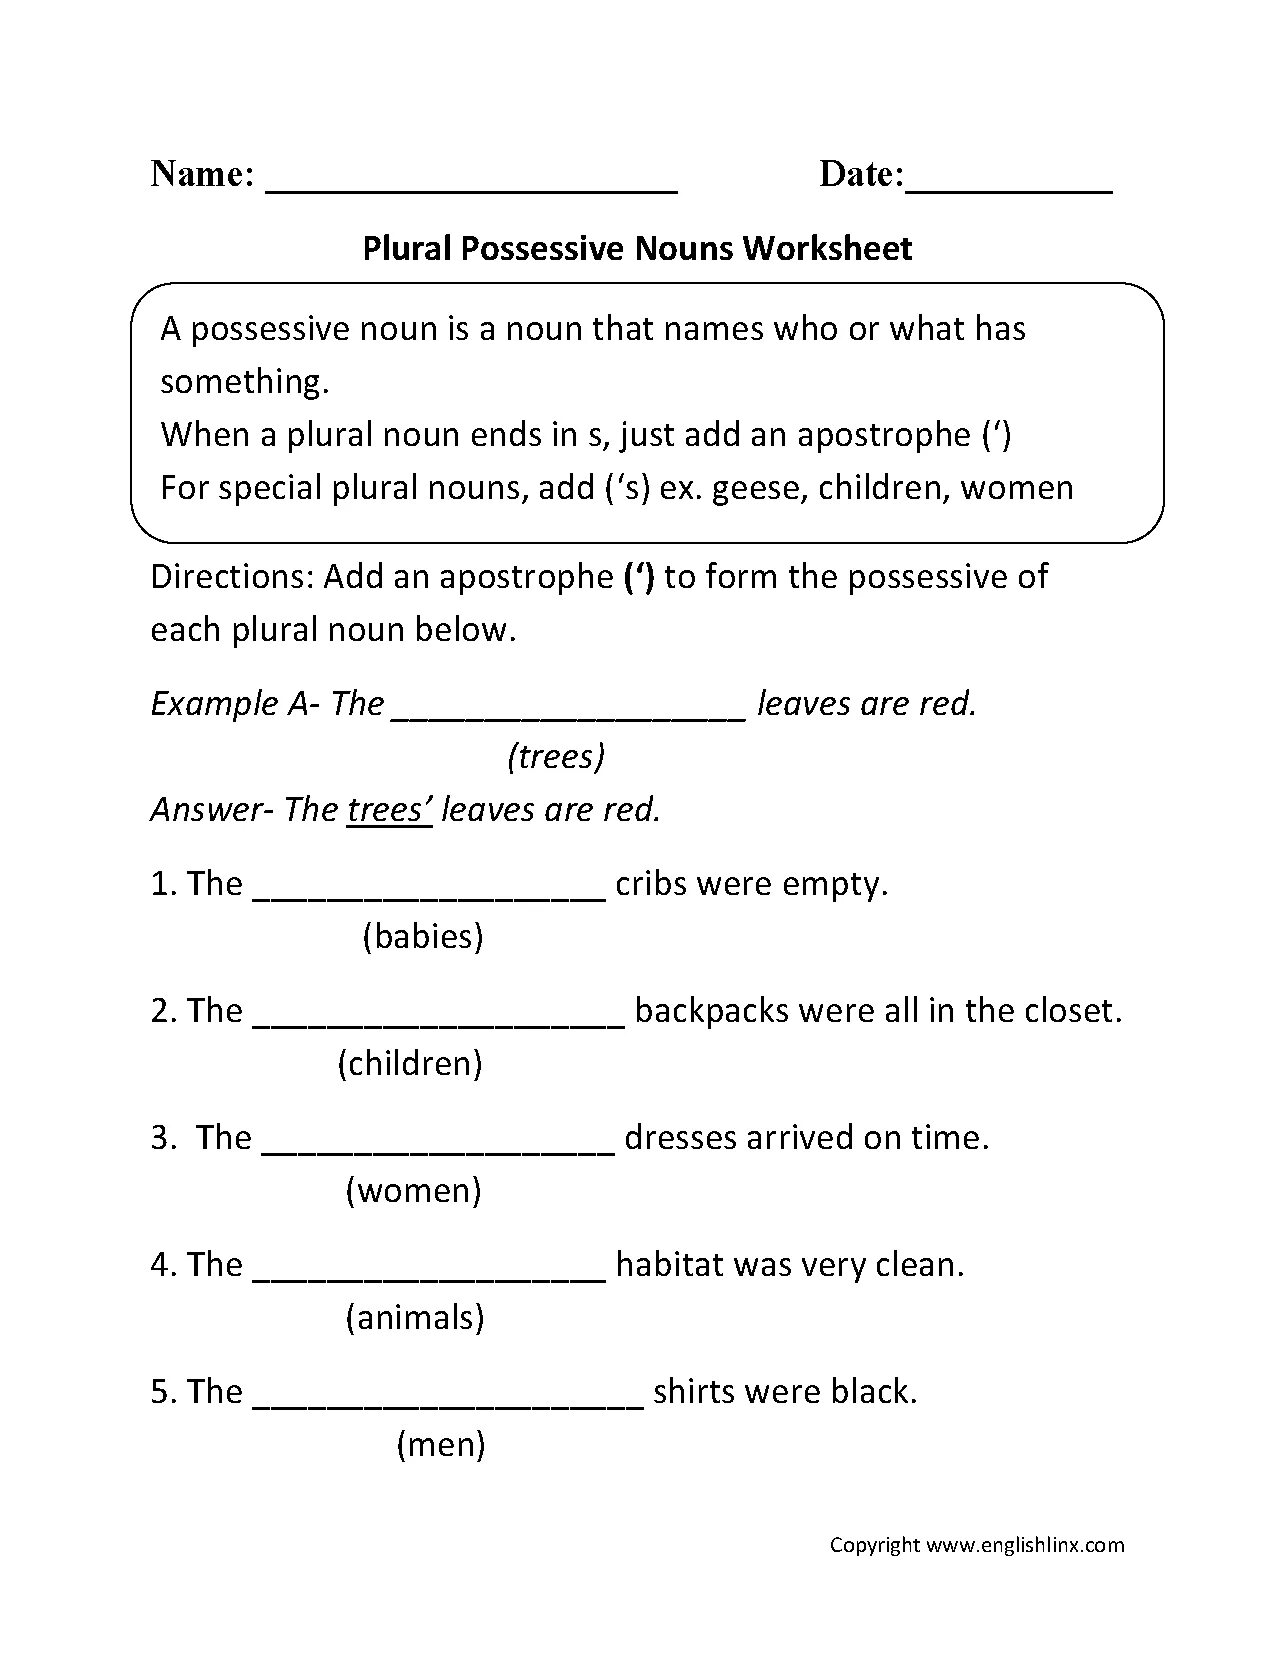 Whose who s exercise. Possessive Nouns Worksheets. Притяжательный падеж Worksheets. Plural possessive Nouns. Притяжательный падеж в английском языке Worksheets for Kids.